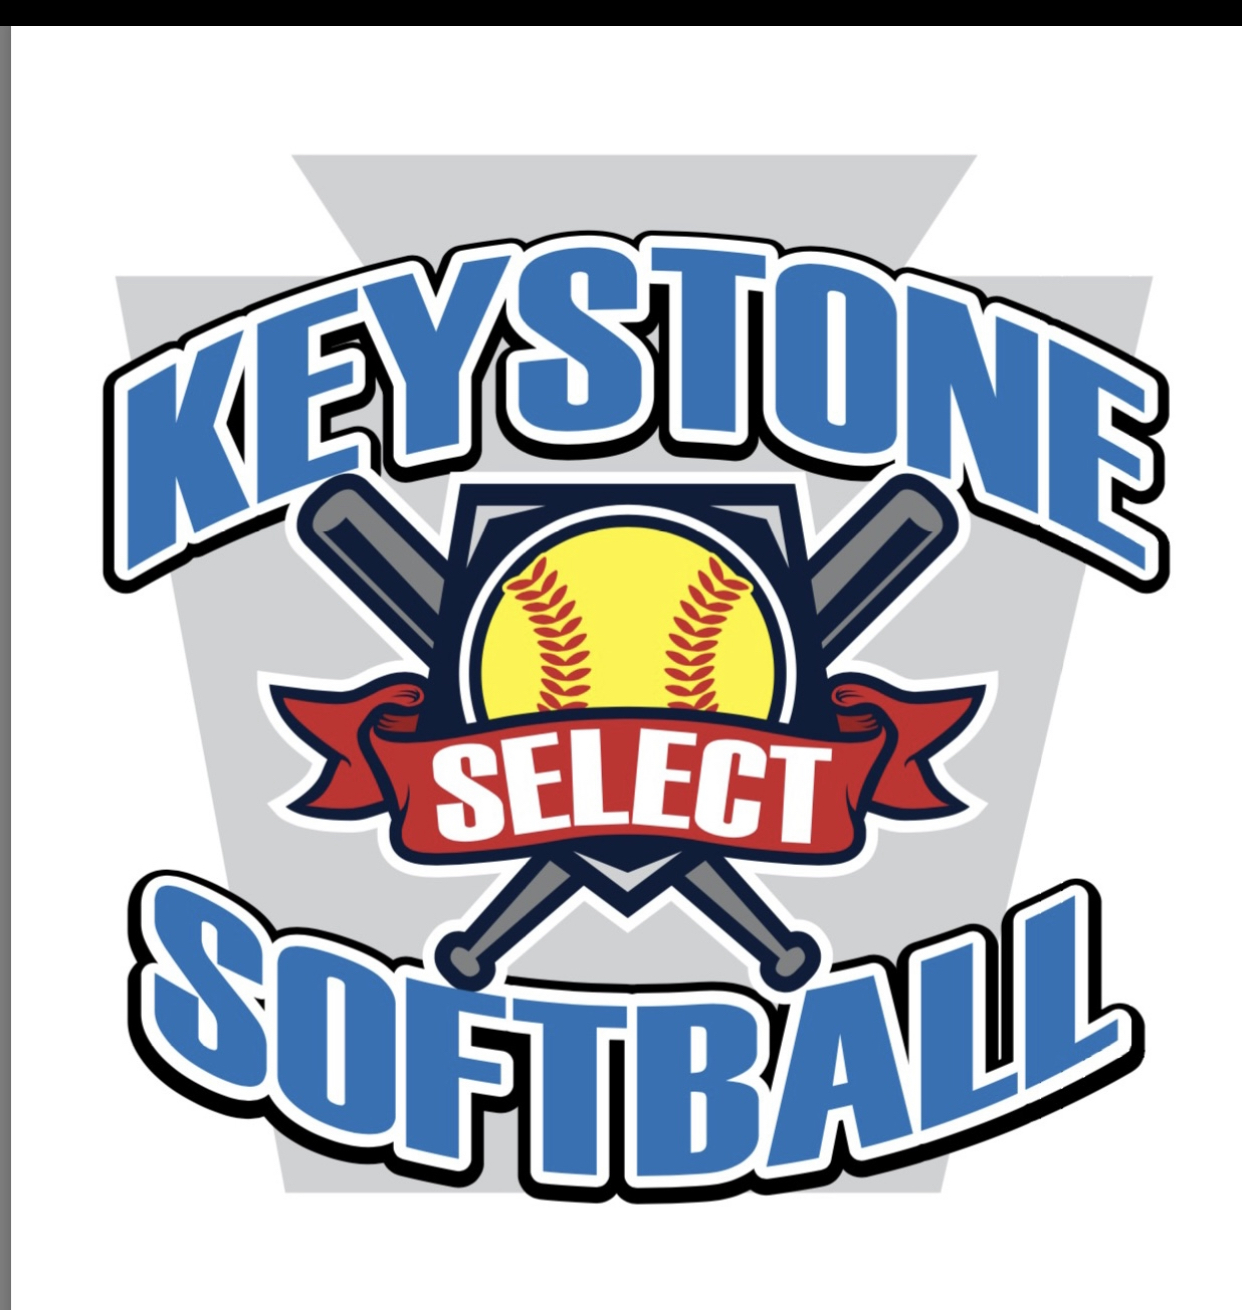 Keystone Select Softball Elm Park Classic Williamsport PA Logo